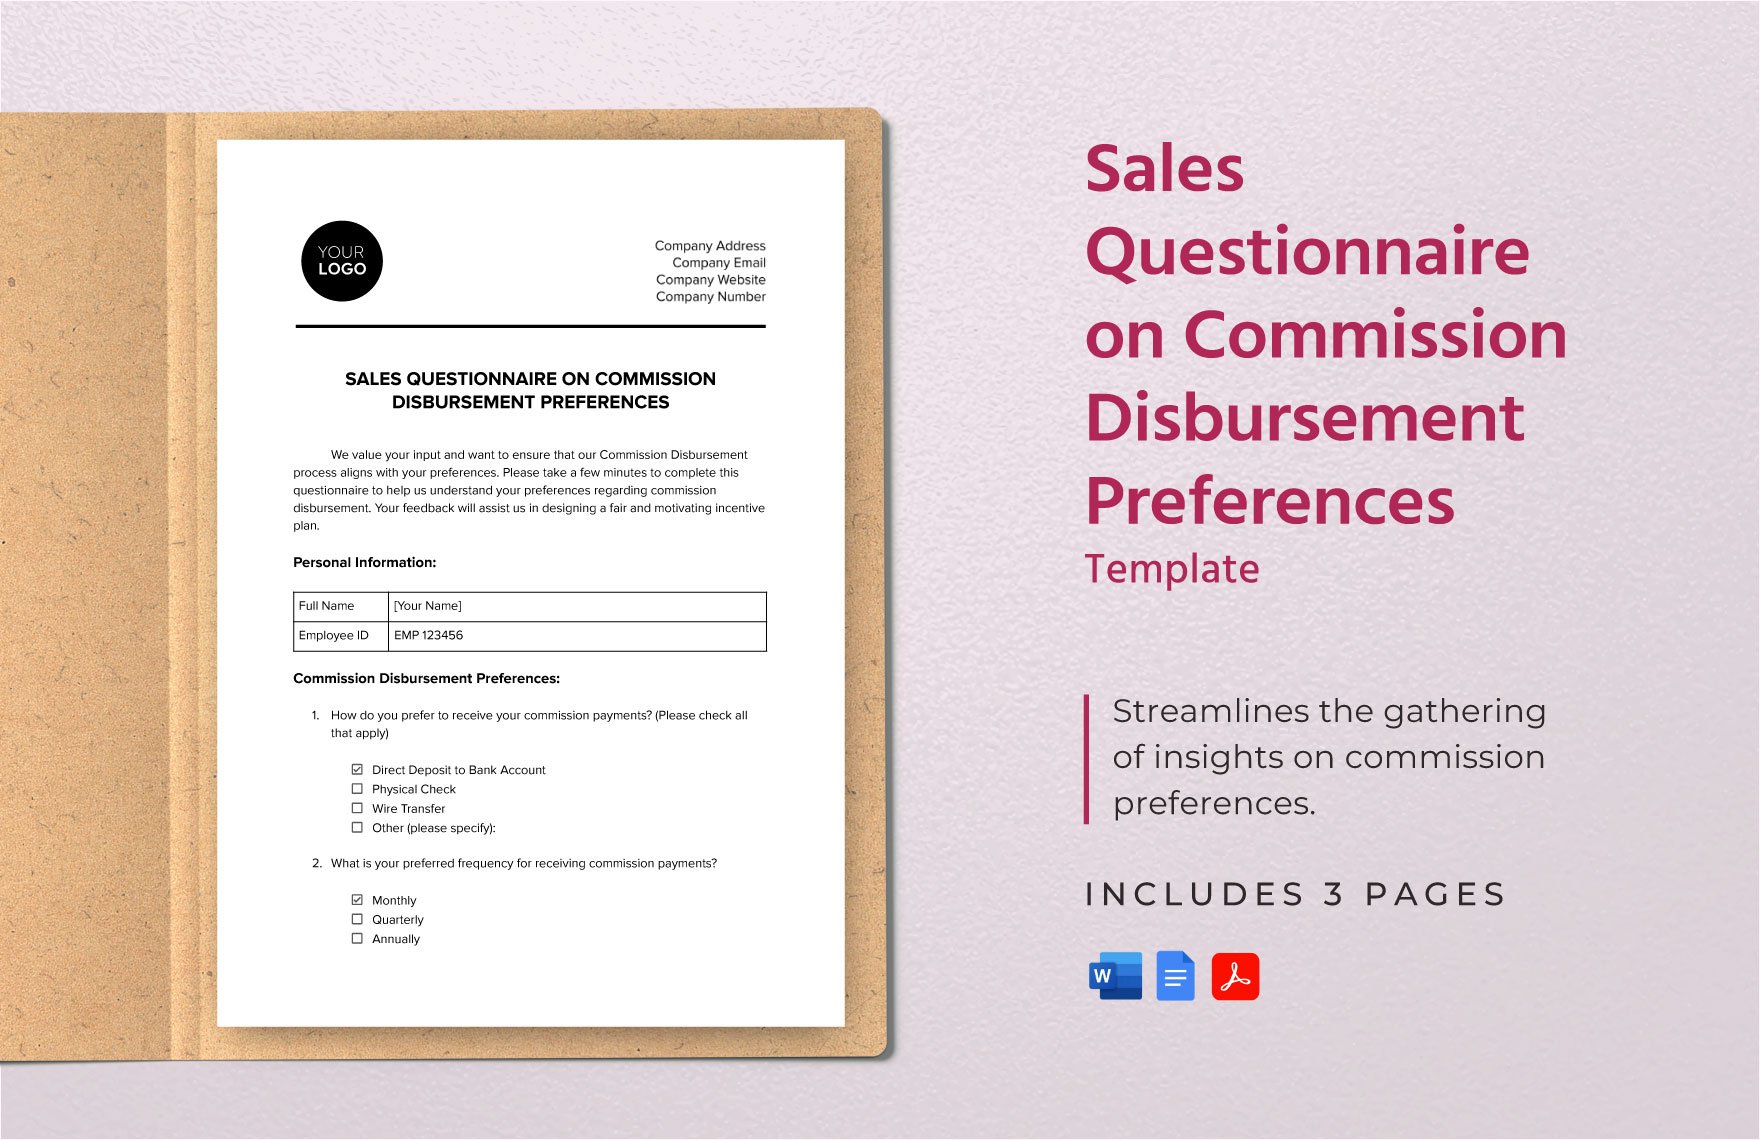 Sales Questionnaire on Commission Disbursement Preferences Template in Word, Google Docs, PDF